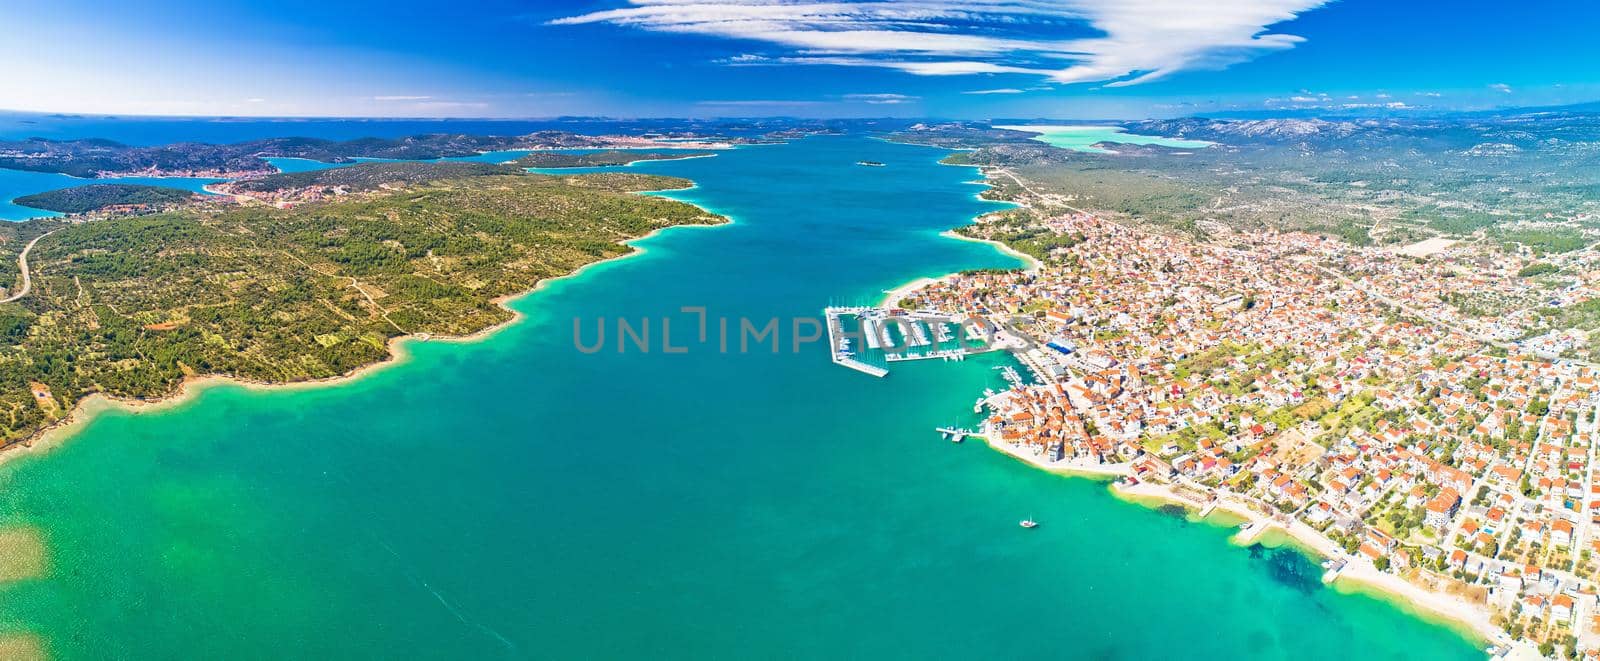 Adriatic town of Pirovac and Murter island panoramic aerial view, Dalmatia region of Croatia